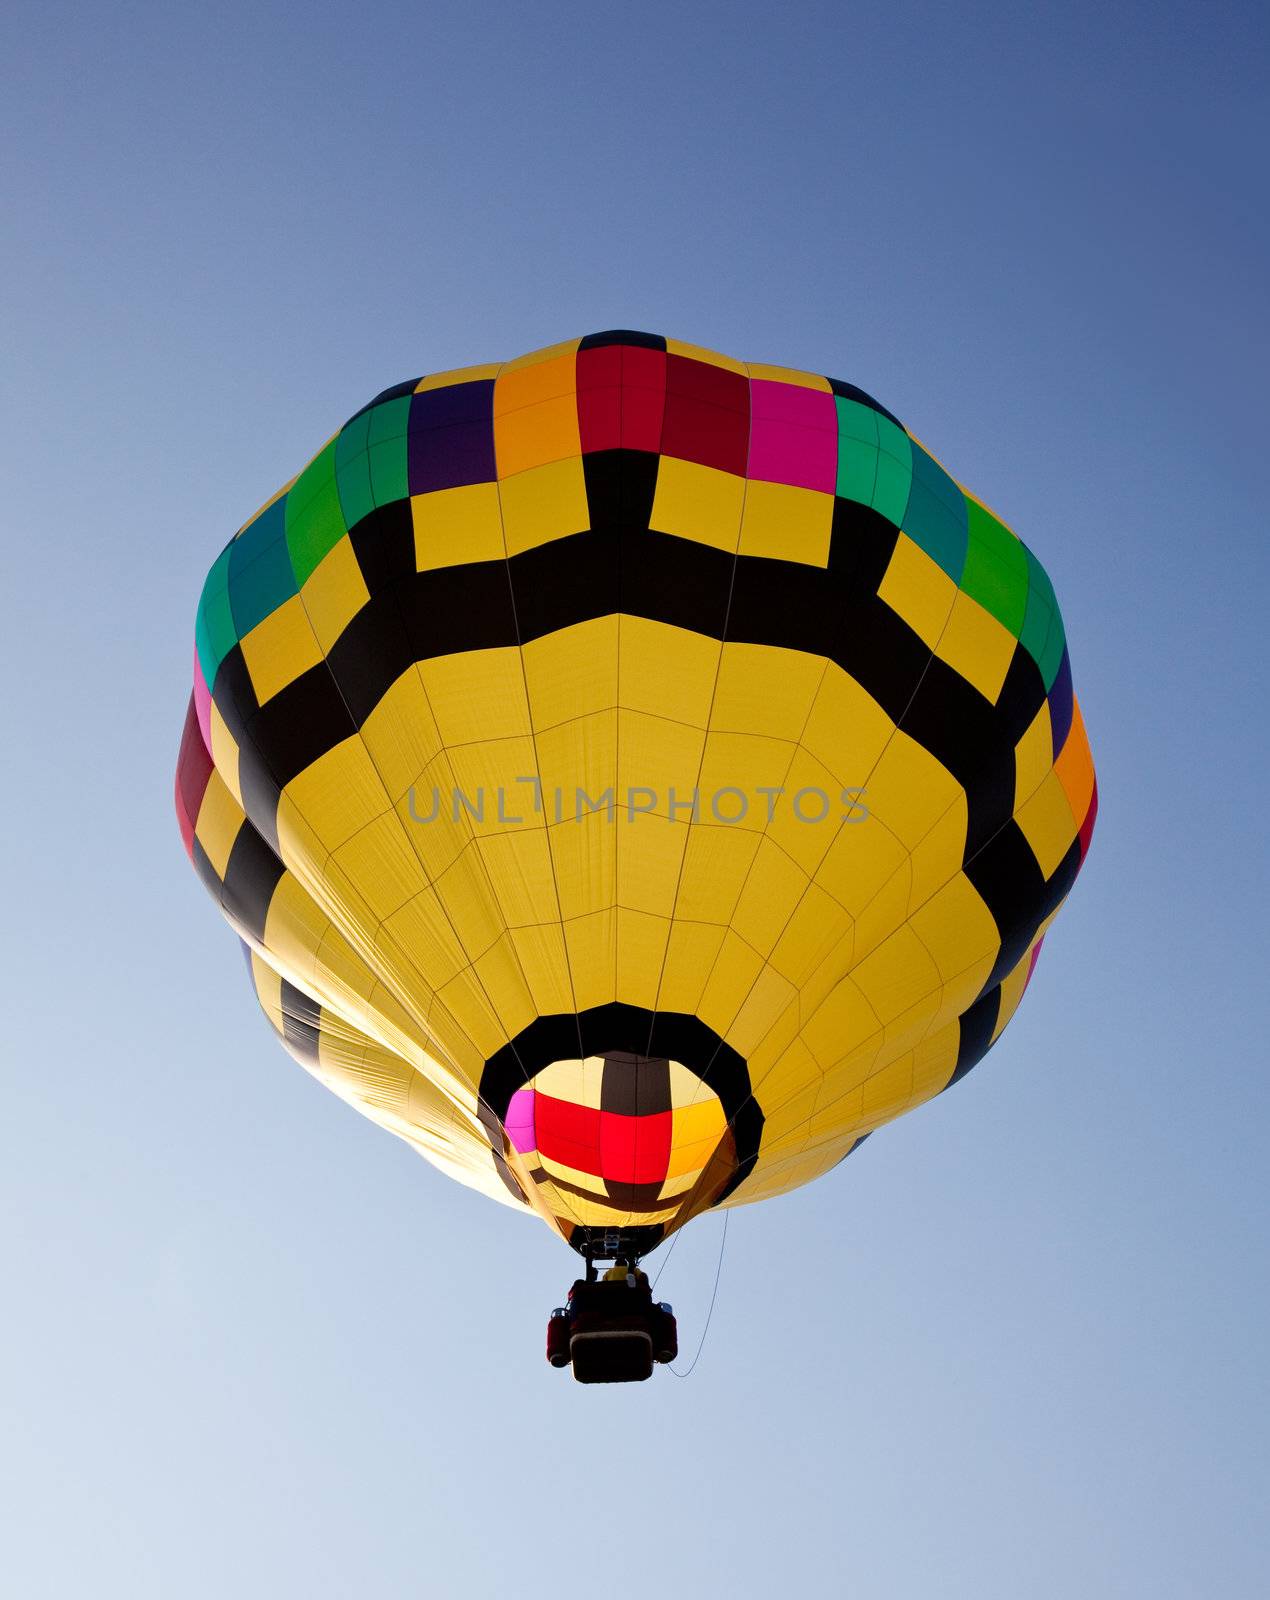 Yellow hot air balloon soaring skyward towards the sun